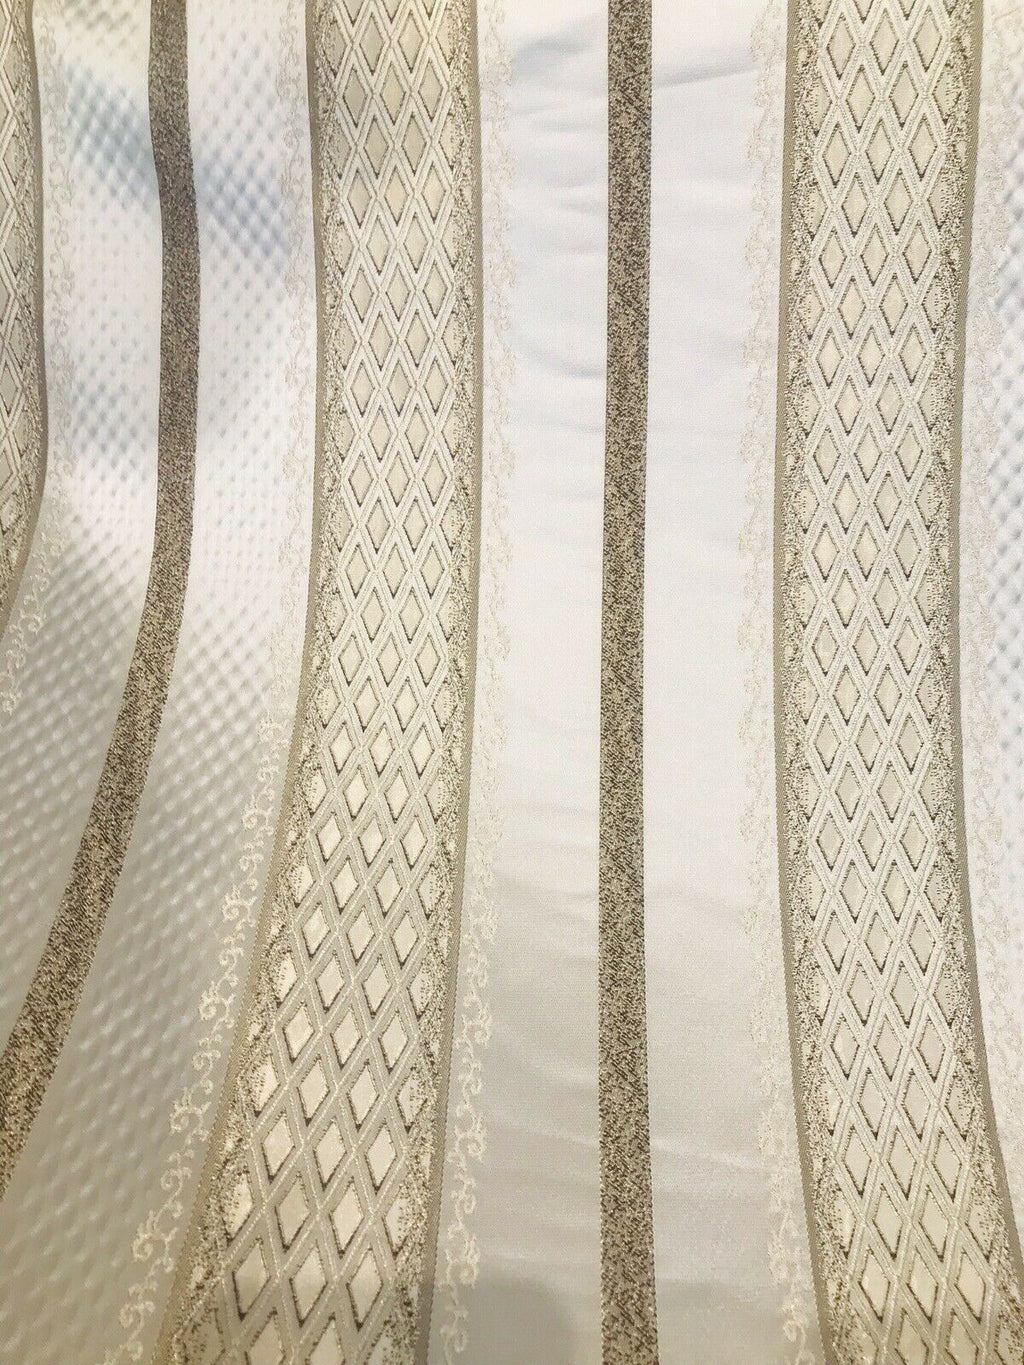 Lady Jennifer Italian Brocade Striped Satin Fabric -Ivory Gold Upholstery Neoclassical - Fancy Styles Fabric Pierre Frey Lee Jofa Brunschwig & Fils